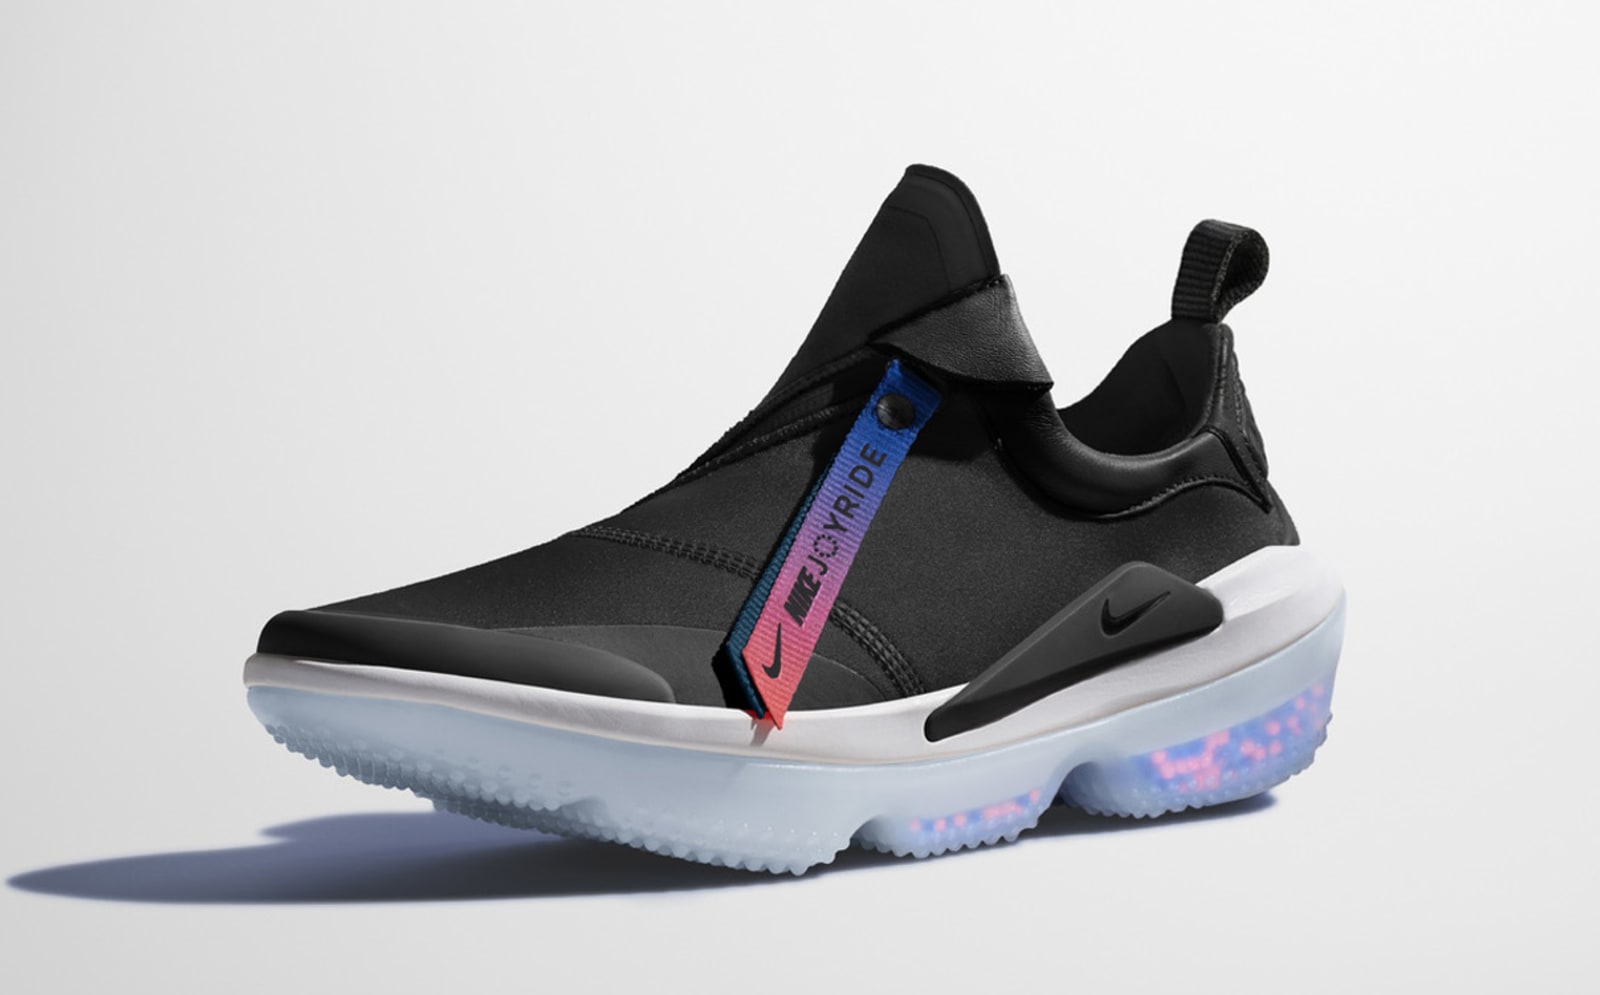 Nike Joyride Technology Comes To The Women's Exclusive NSW Optik